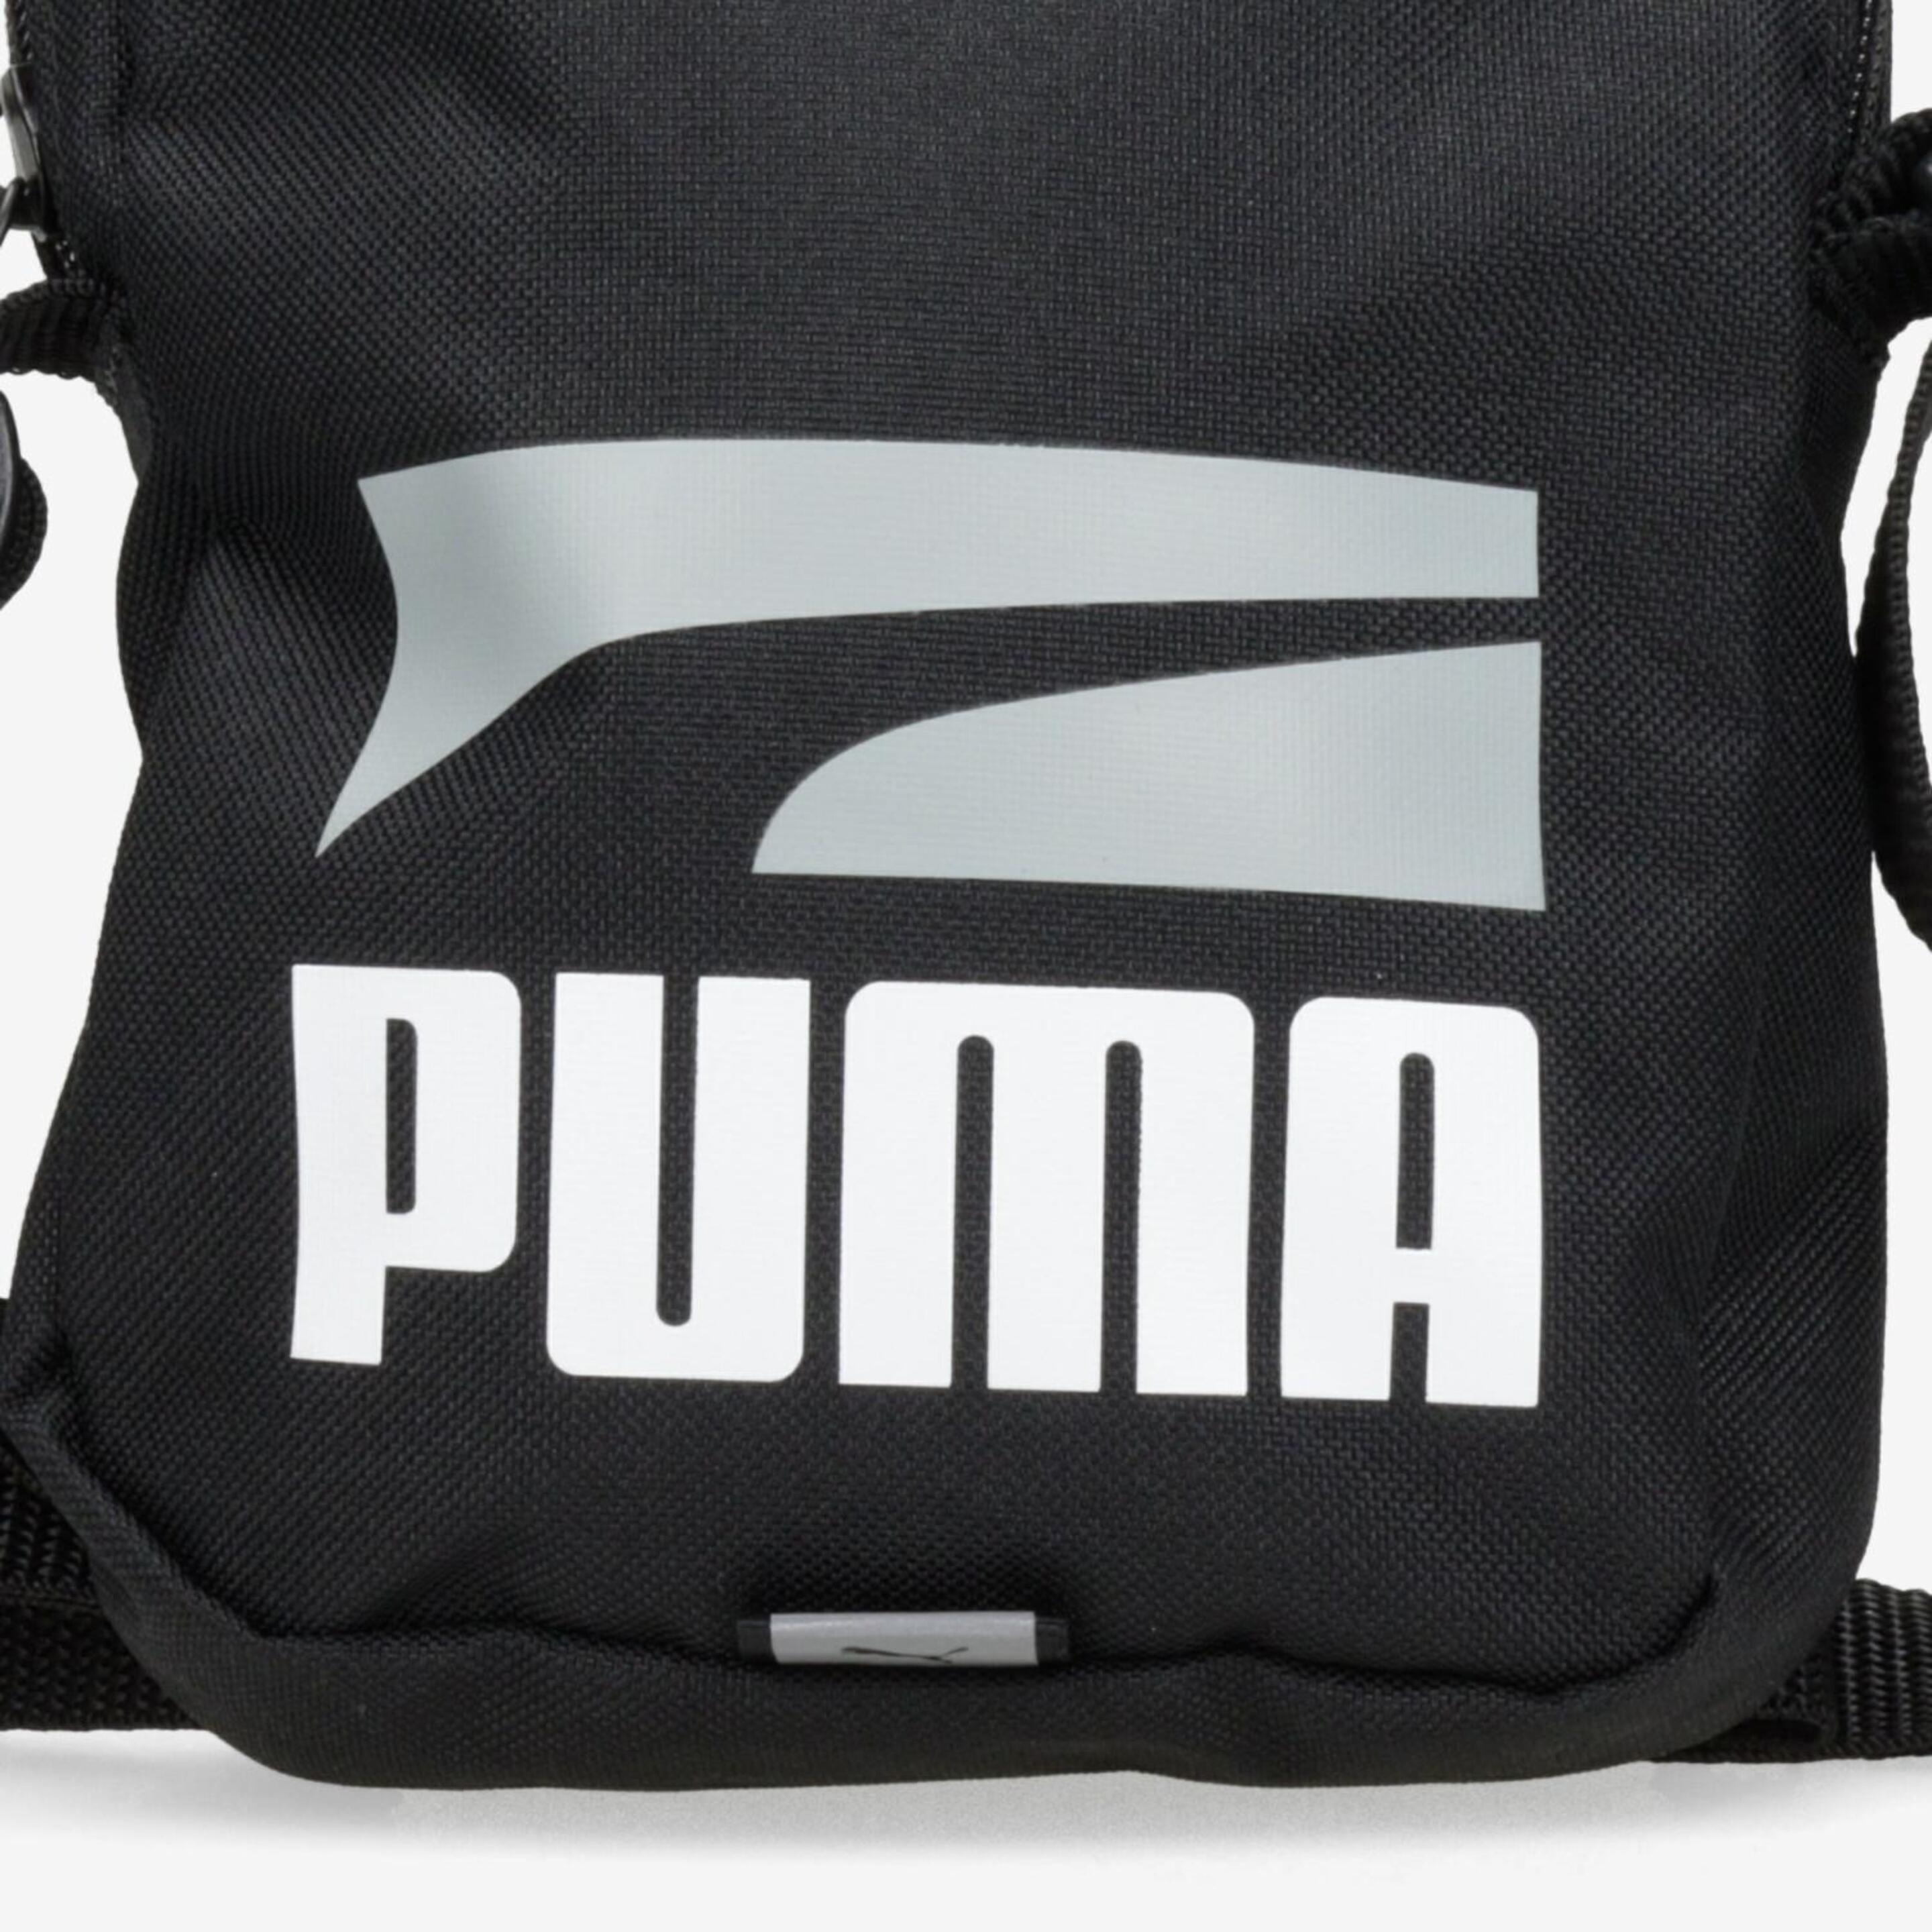 Puma Plus Ii